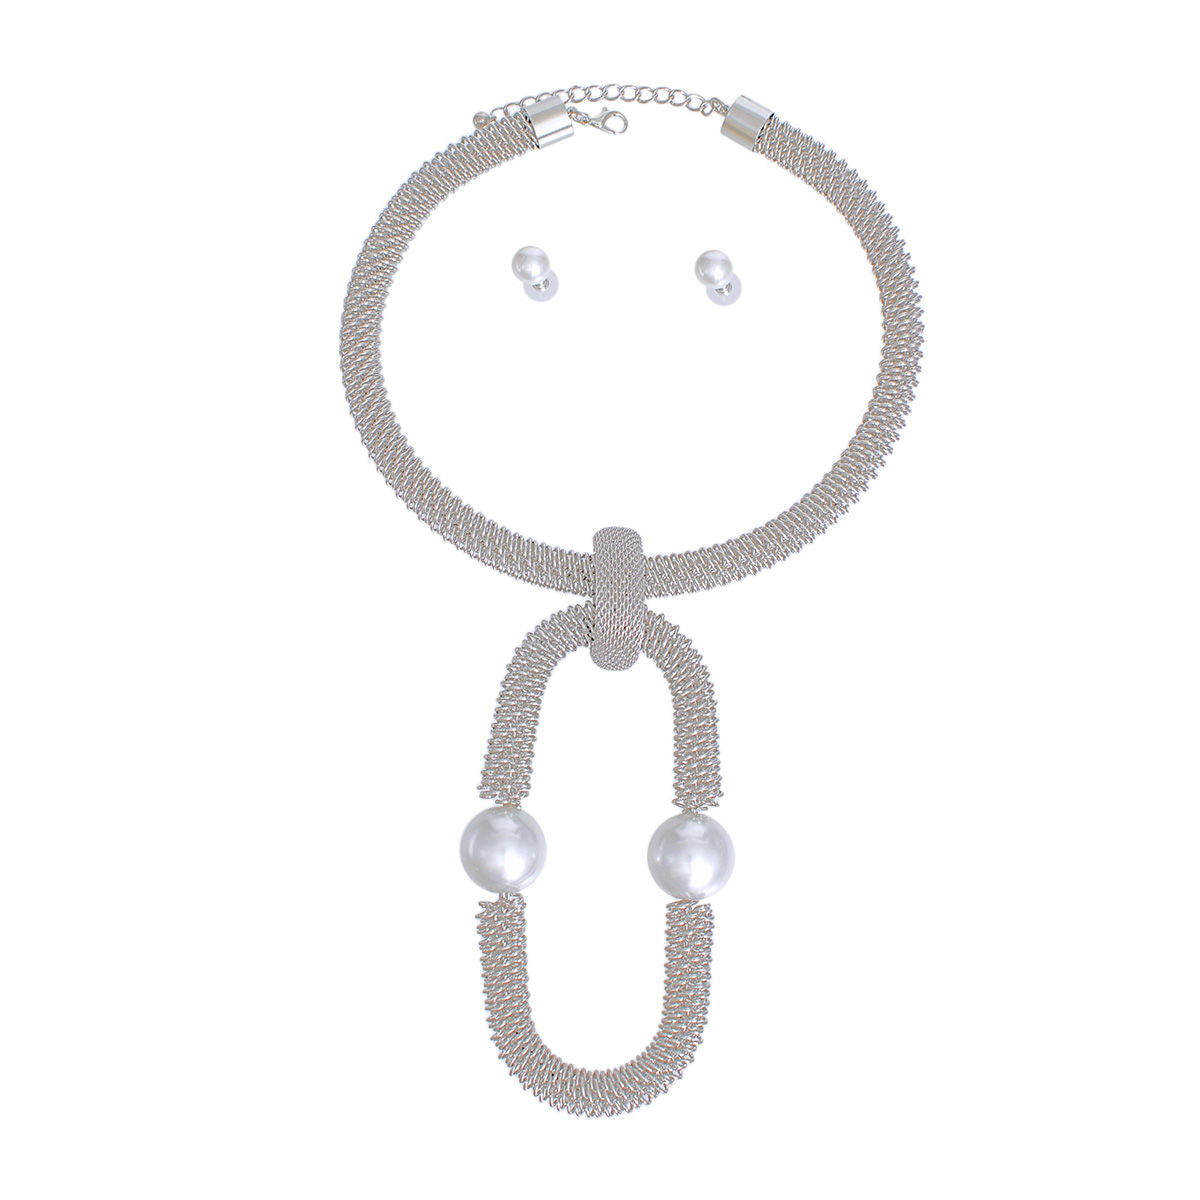 Necklace Silver Woven Mesh Rigid Collar for Women